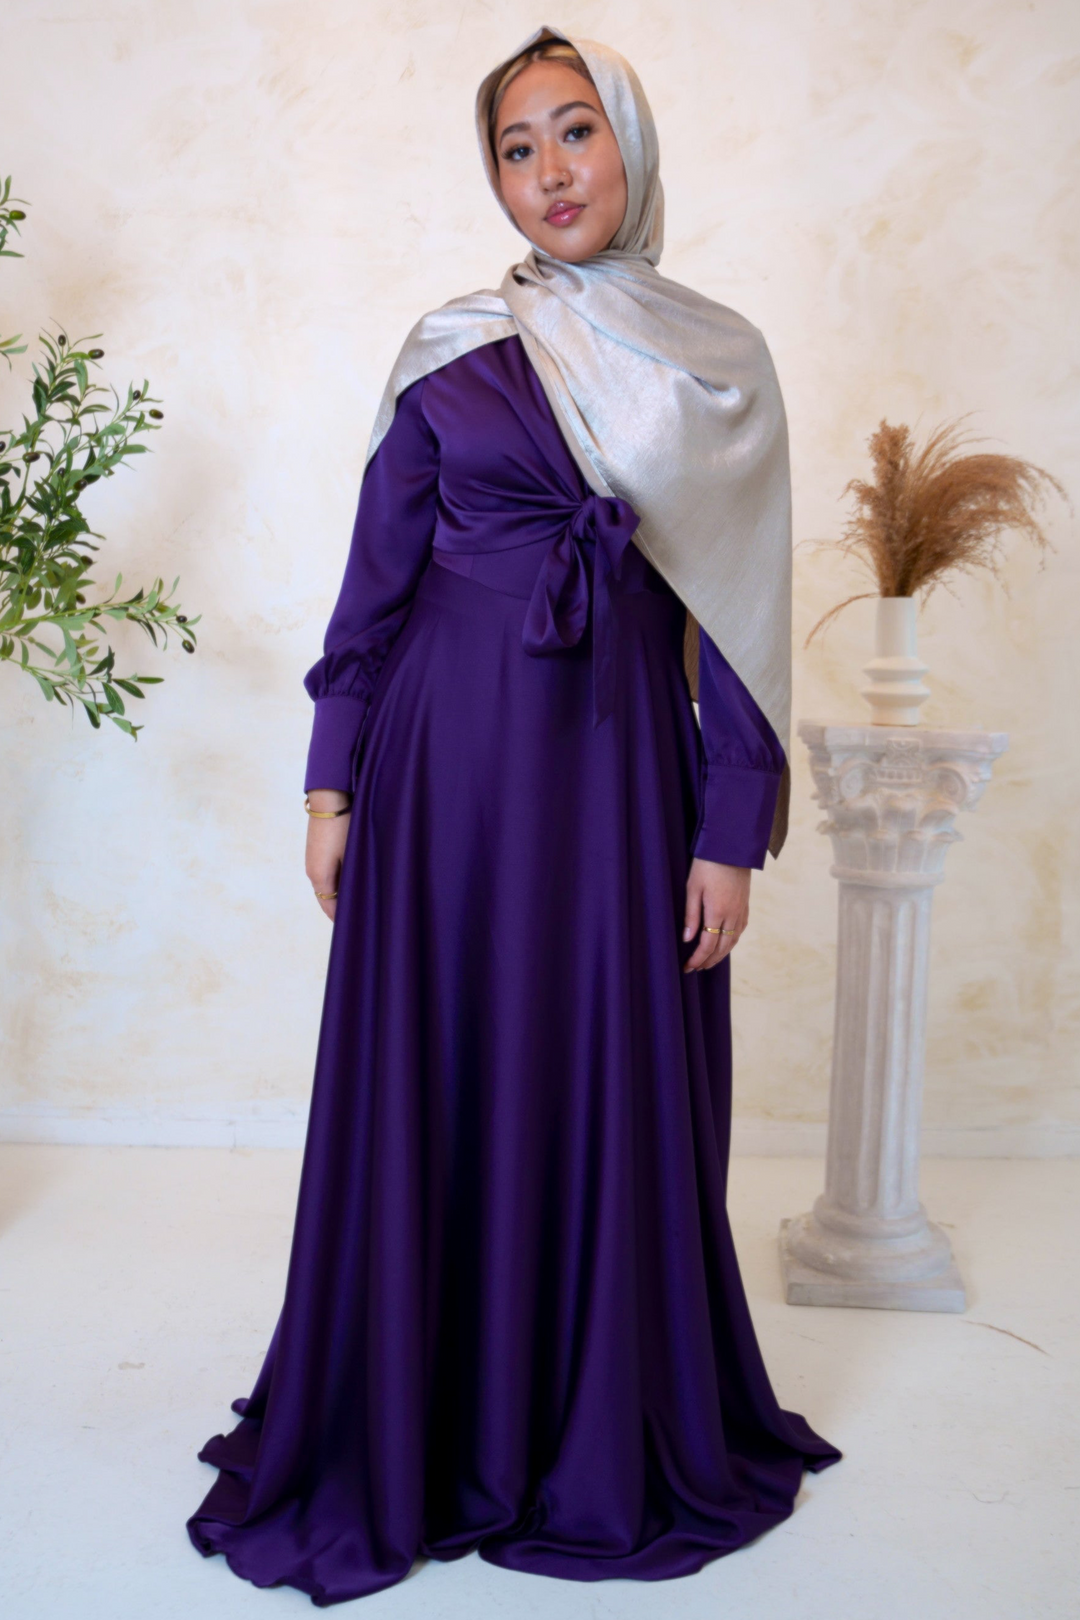 a woman wearing a purple dress and a silver shawl